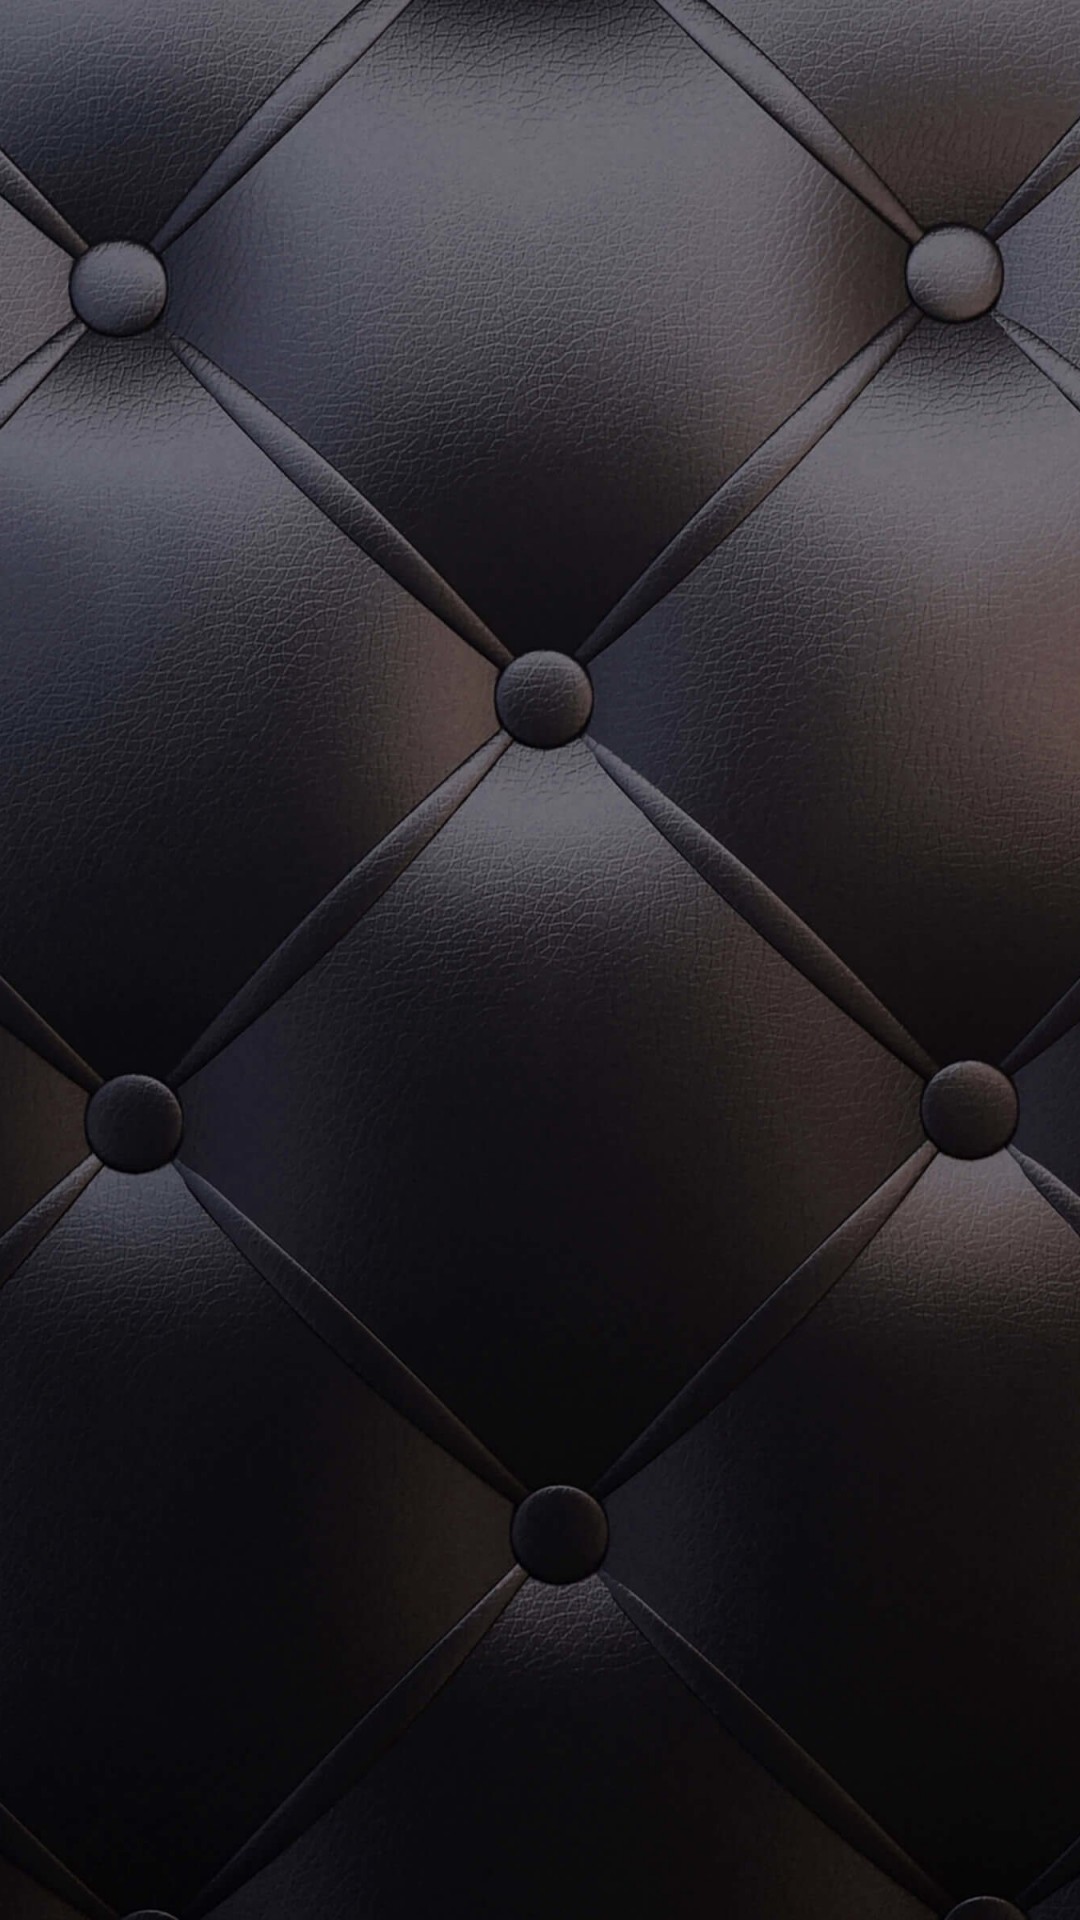 Black Leather Vintage Sofa Wallpaper for Google Nexus 5X